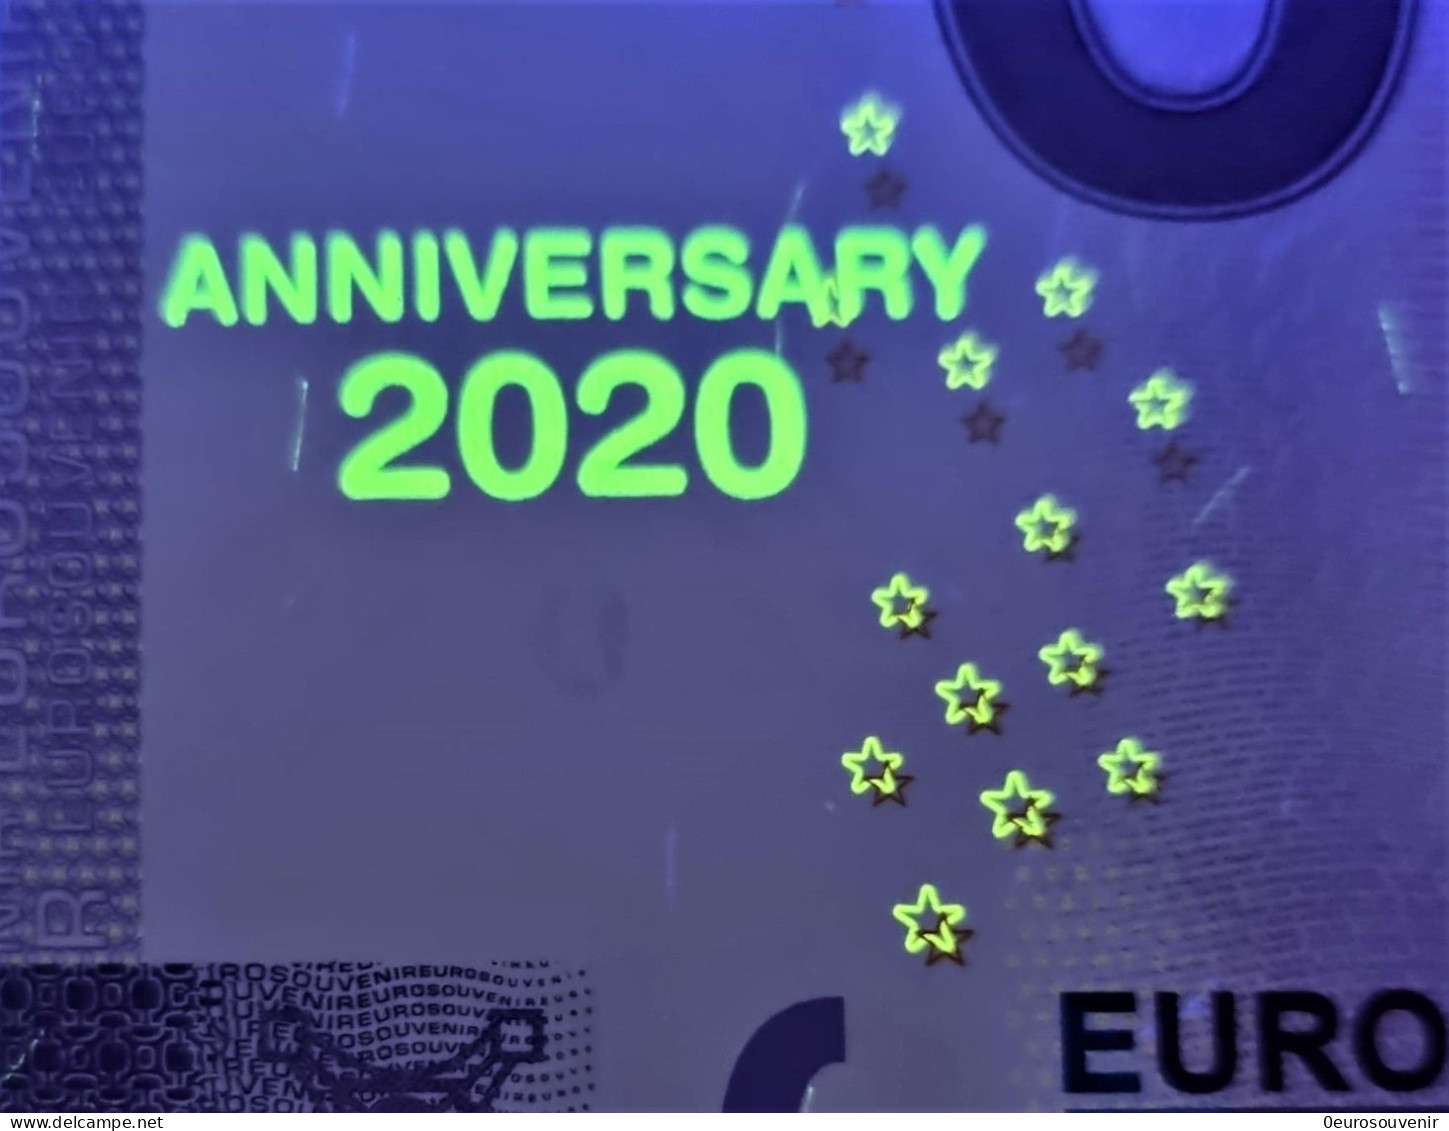 0-Euro XEMF 2020-1 SAURIER - GIGANTEN DER MEERE - LOKSCHUPPEN ROSENHEIM Set NORMAL+ANNIVERSARY - Privatentwürfe